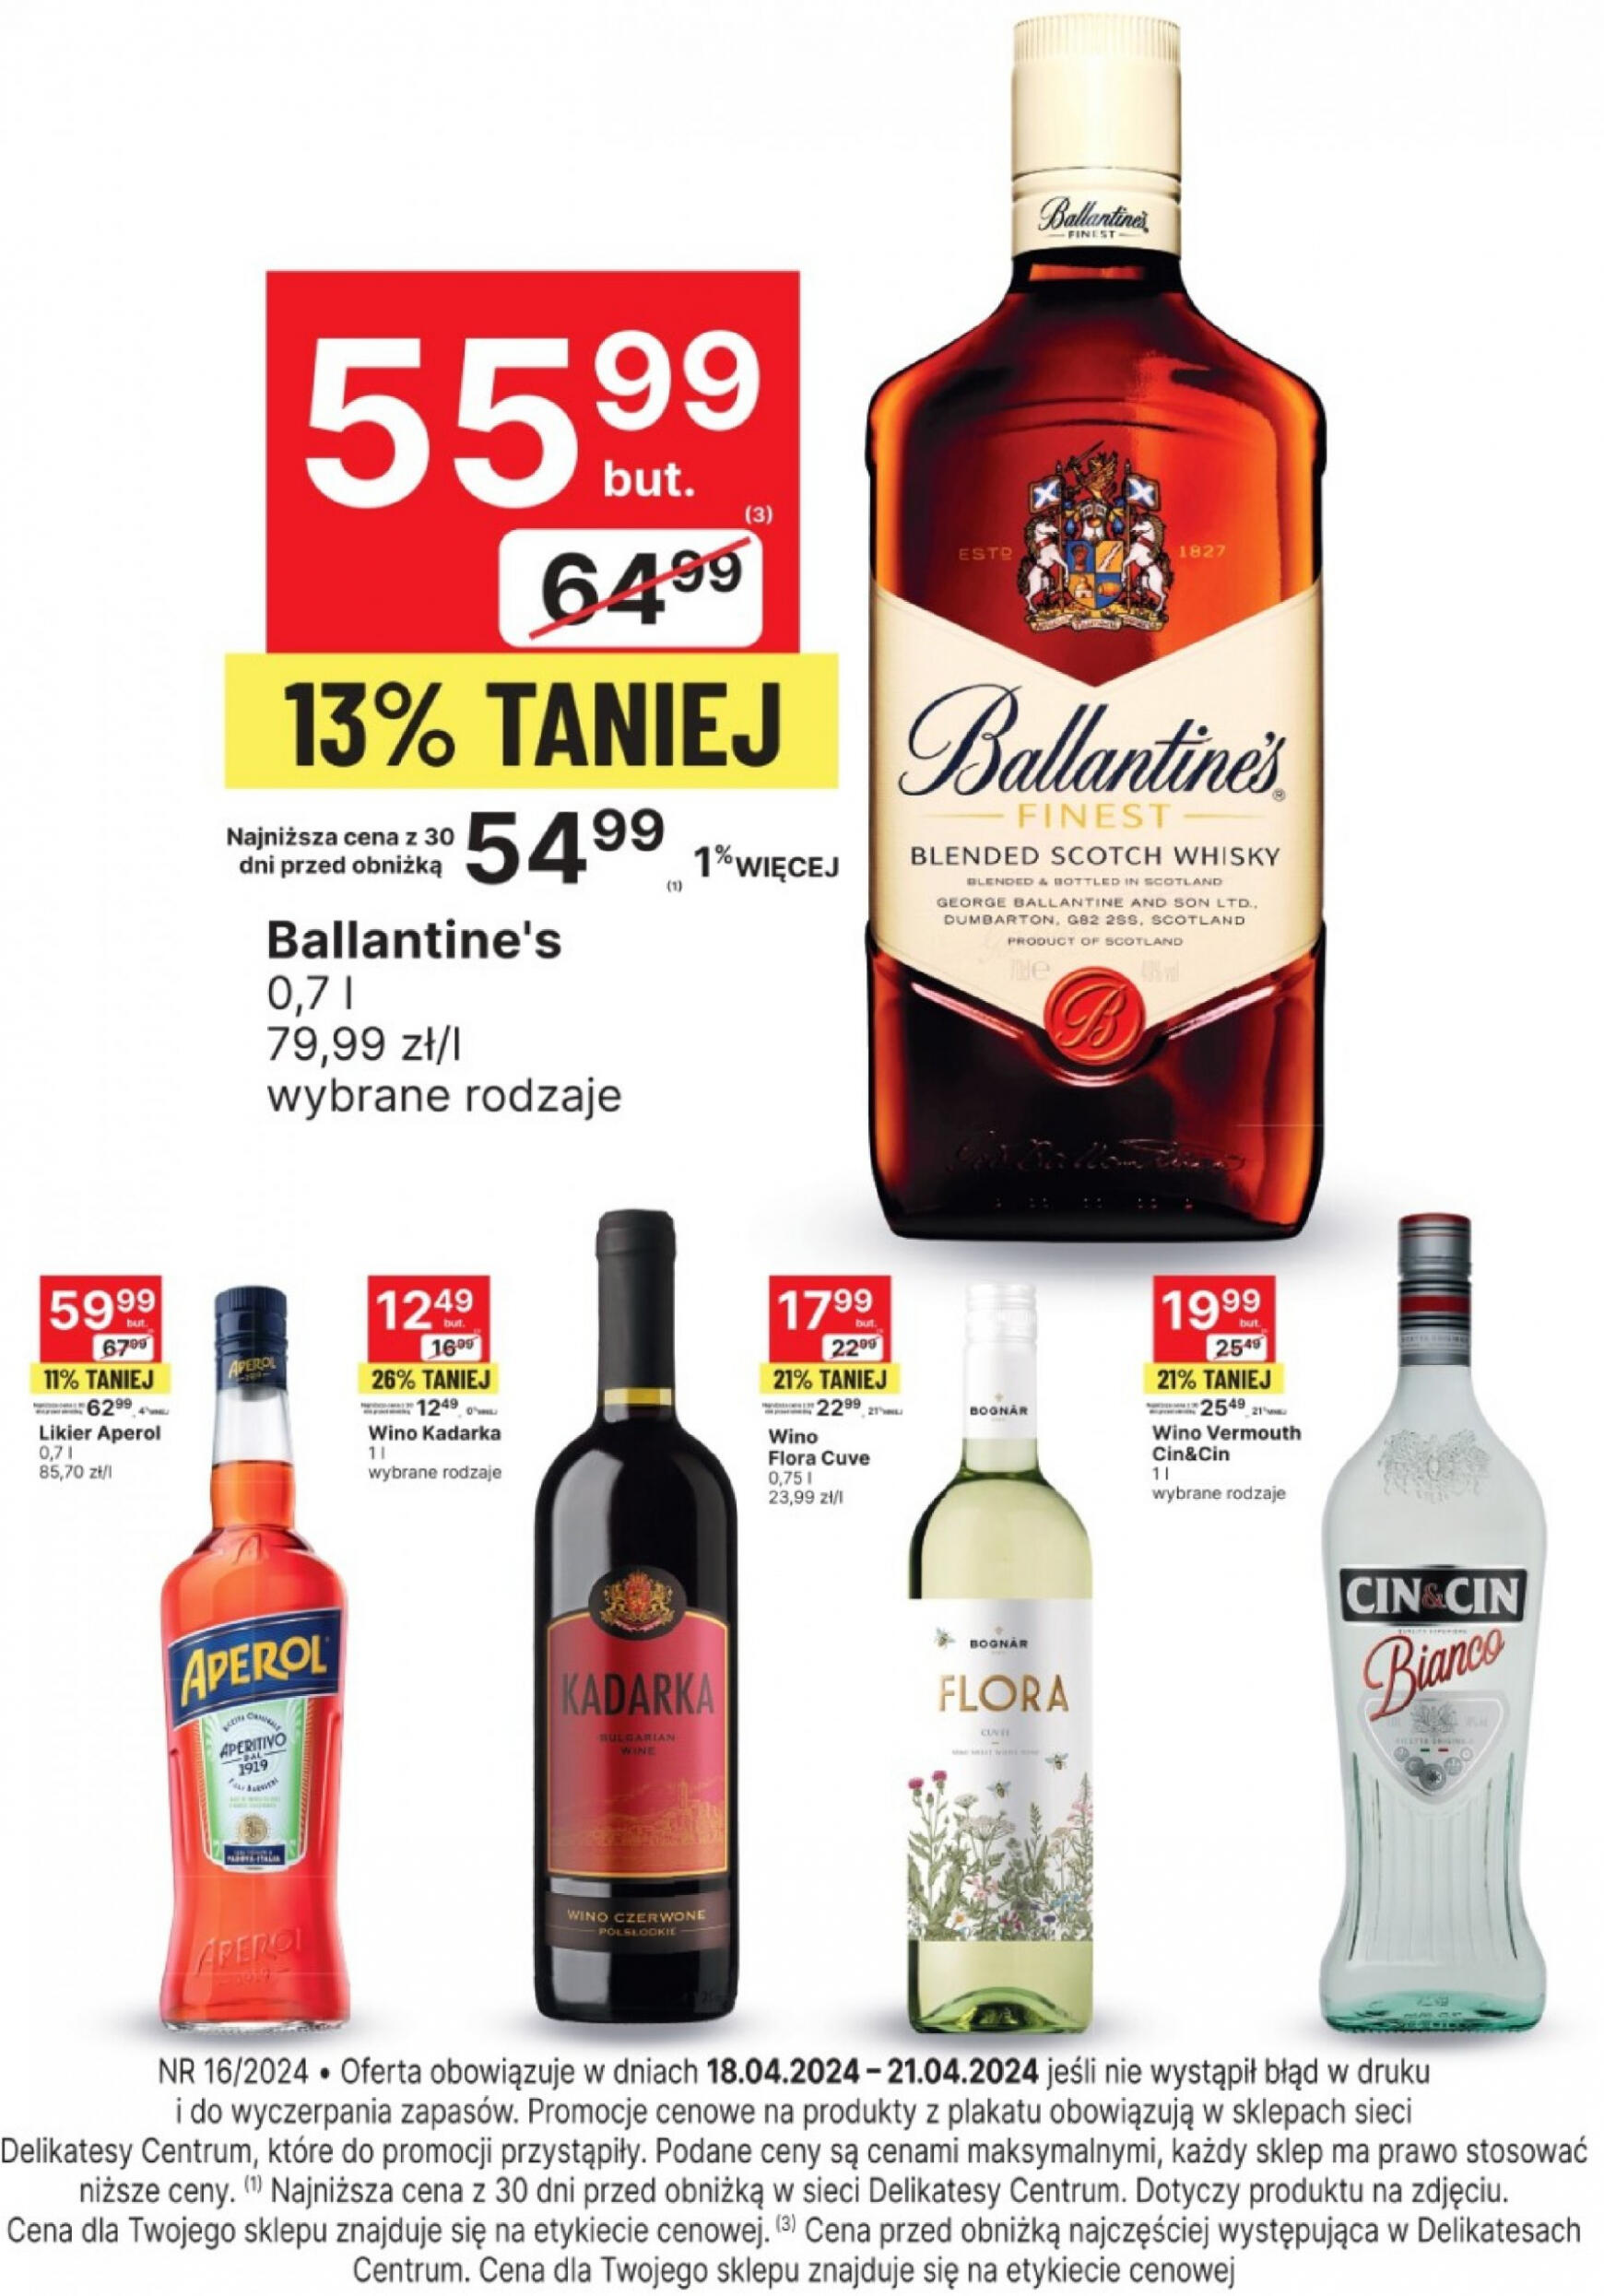 delikatesy-centrum - Delikatesy Centrum - Folder alkoholowy gazetka aktualna ważna od 18.04. - 21.04. - page: 2